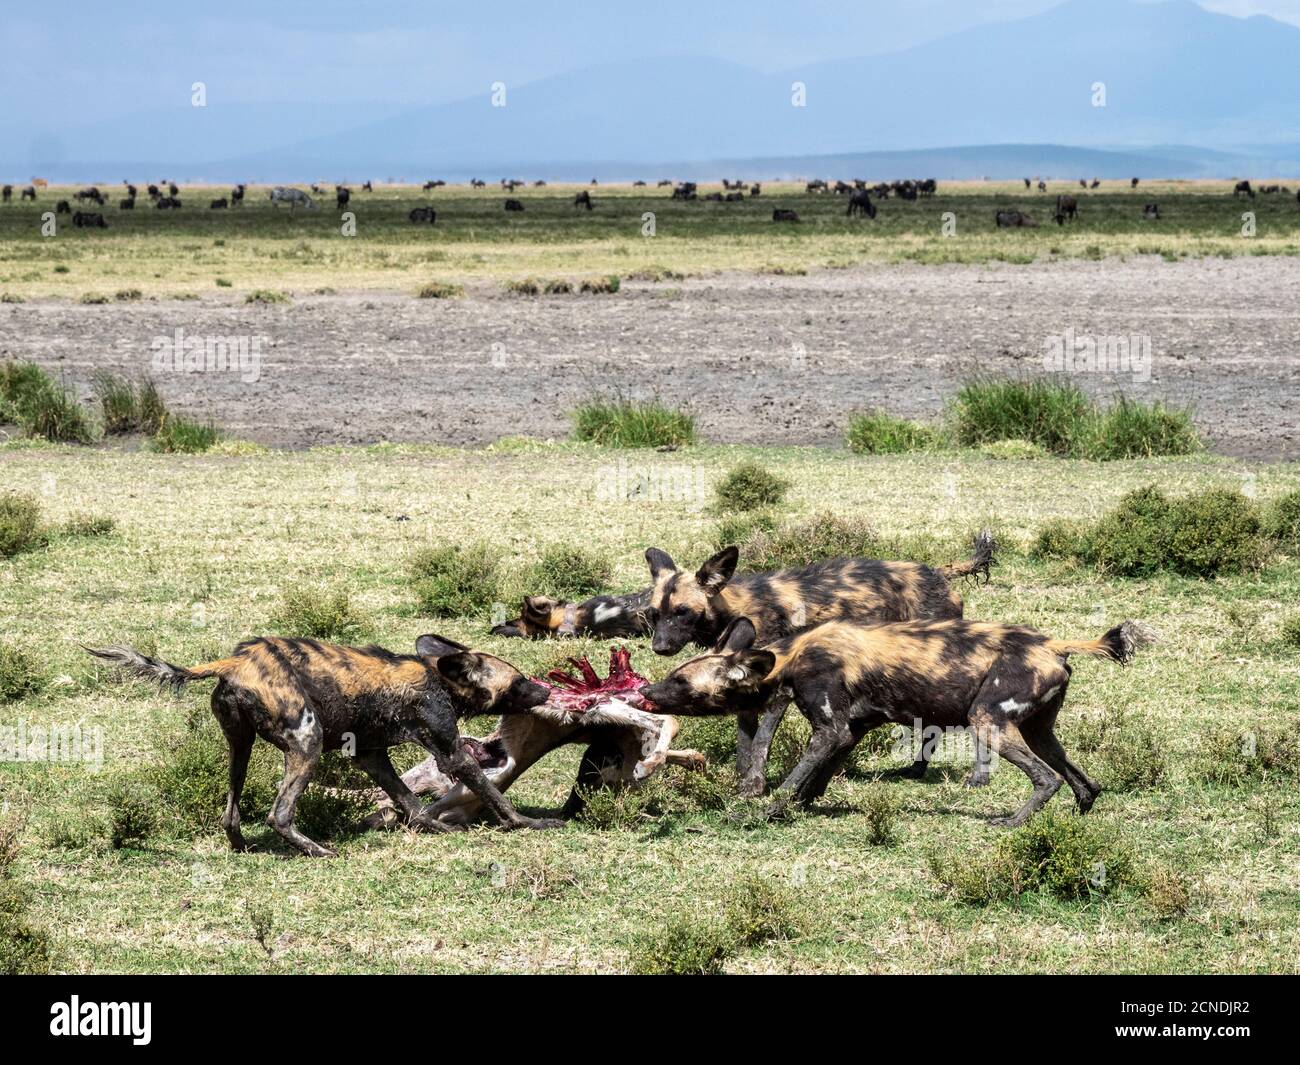 Afrikanische Wildhunde (Lycaon pictus), Fütterung auf einem wildebeest Kalb töten im Serengeti Nationalpark, Tansania, Ostafrika, Afrika Stockfoto